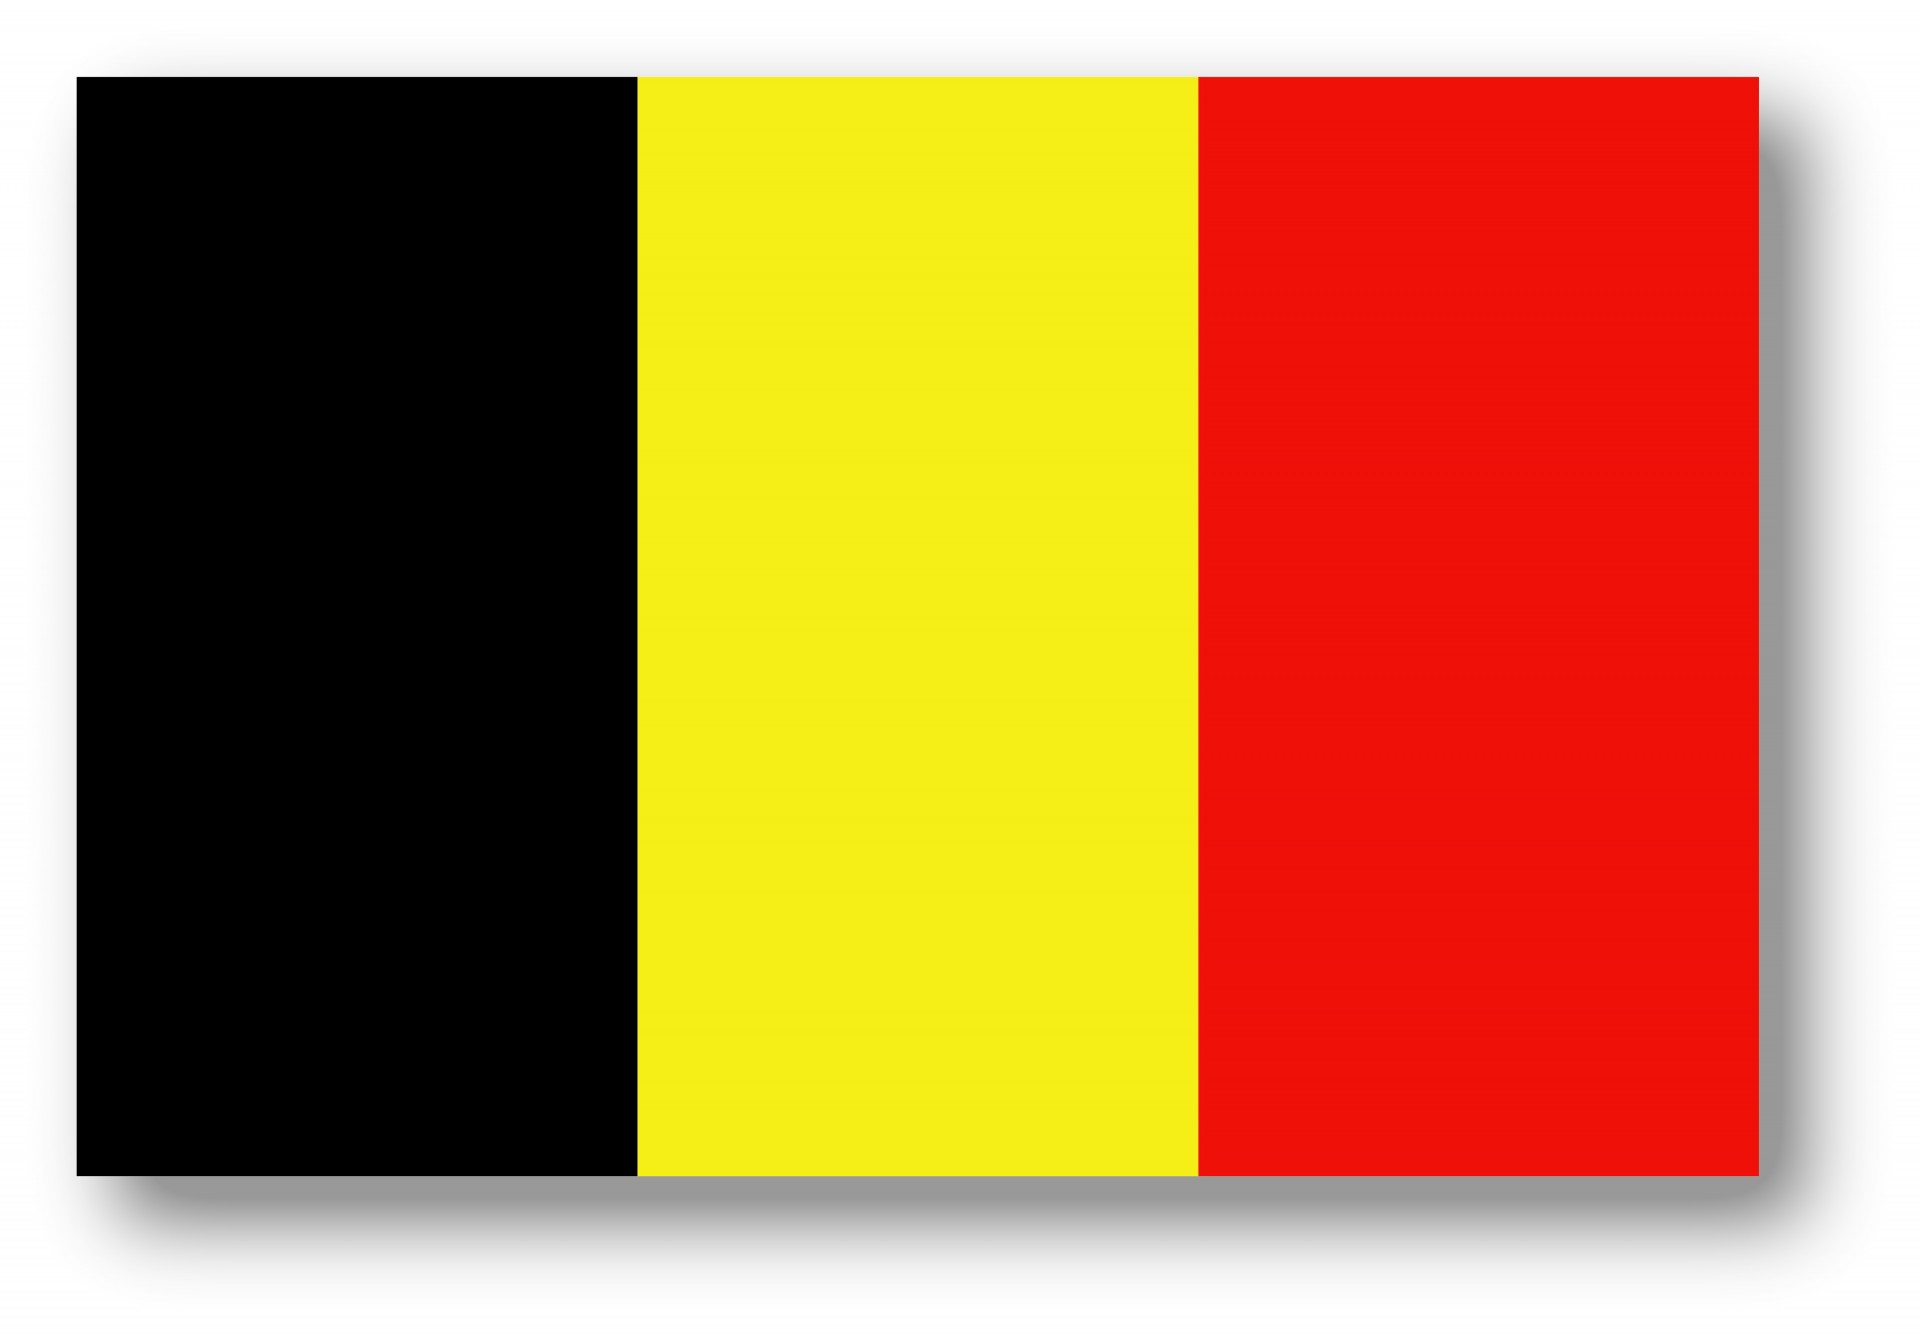 бельгия флаг и герб